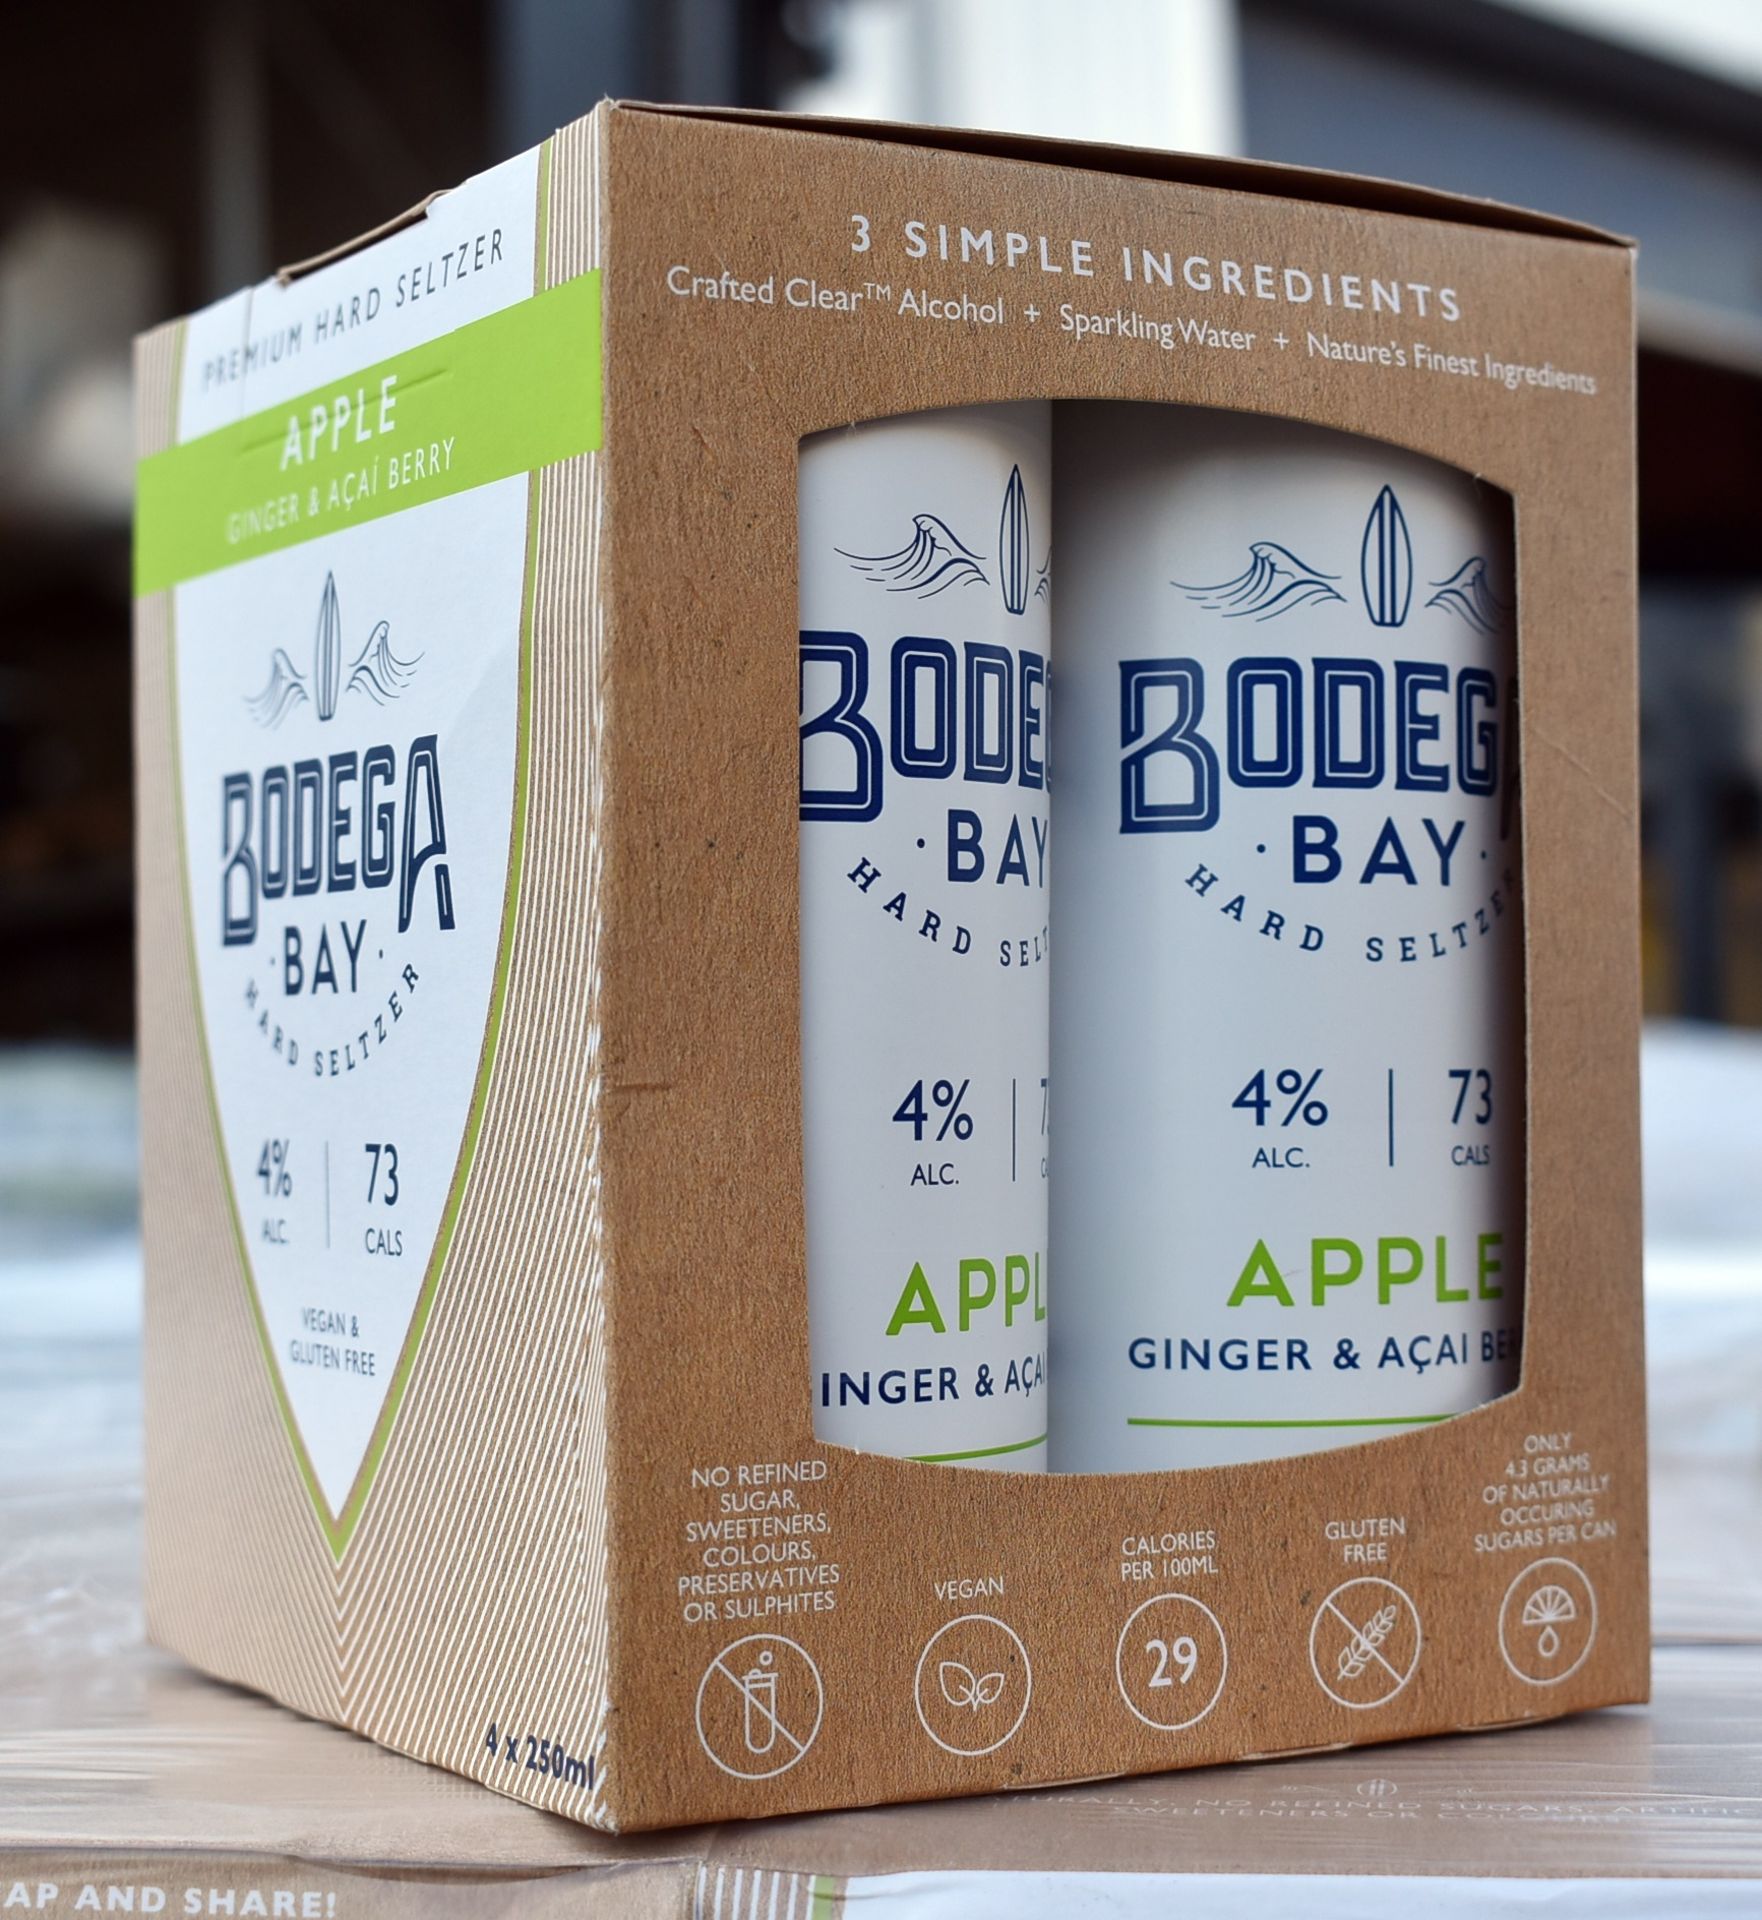 24 x Bodega Bay Hard Seltzer 250ml Alcoholic Sparkling Water Drinks - Apple Ginger & Acai Berry - 4% - Image 3 of 9